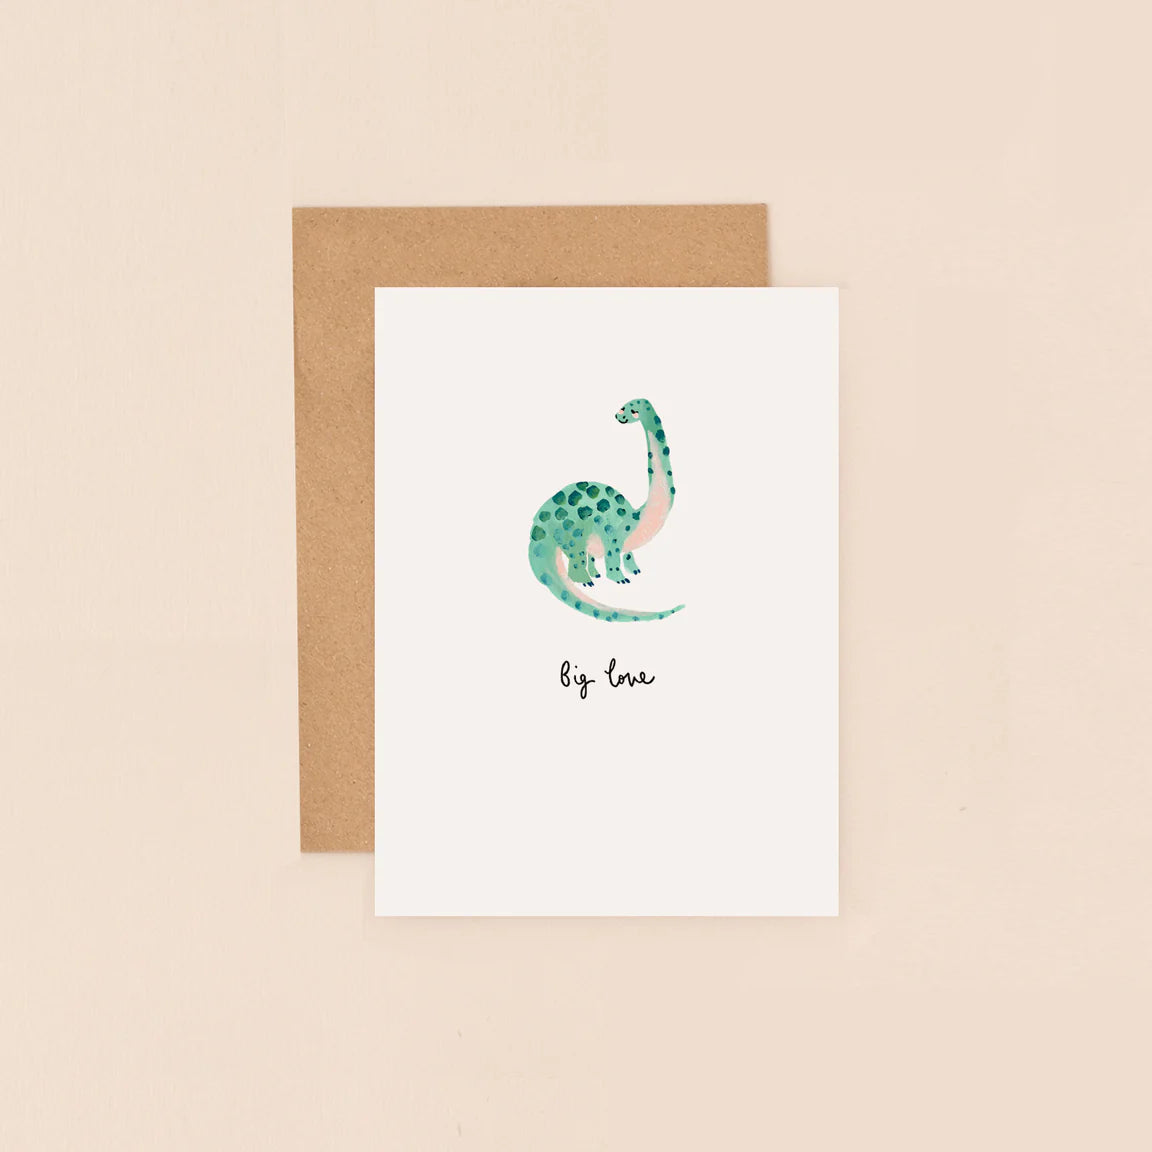 Fabulous Greeting Cards Louise Mulgrew Mini Card Dinosaur Big Love Card by Weirs of Baggot Street